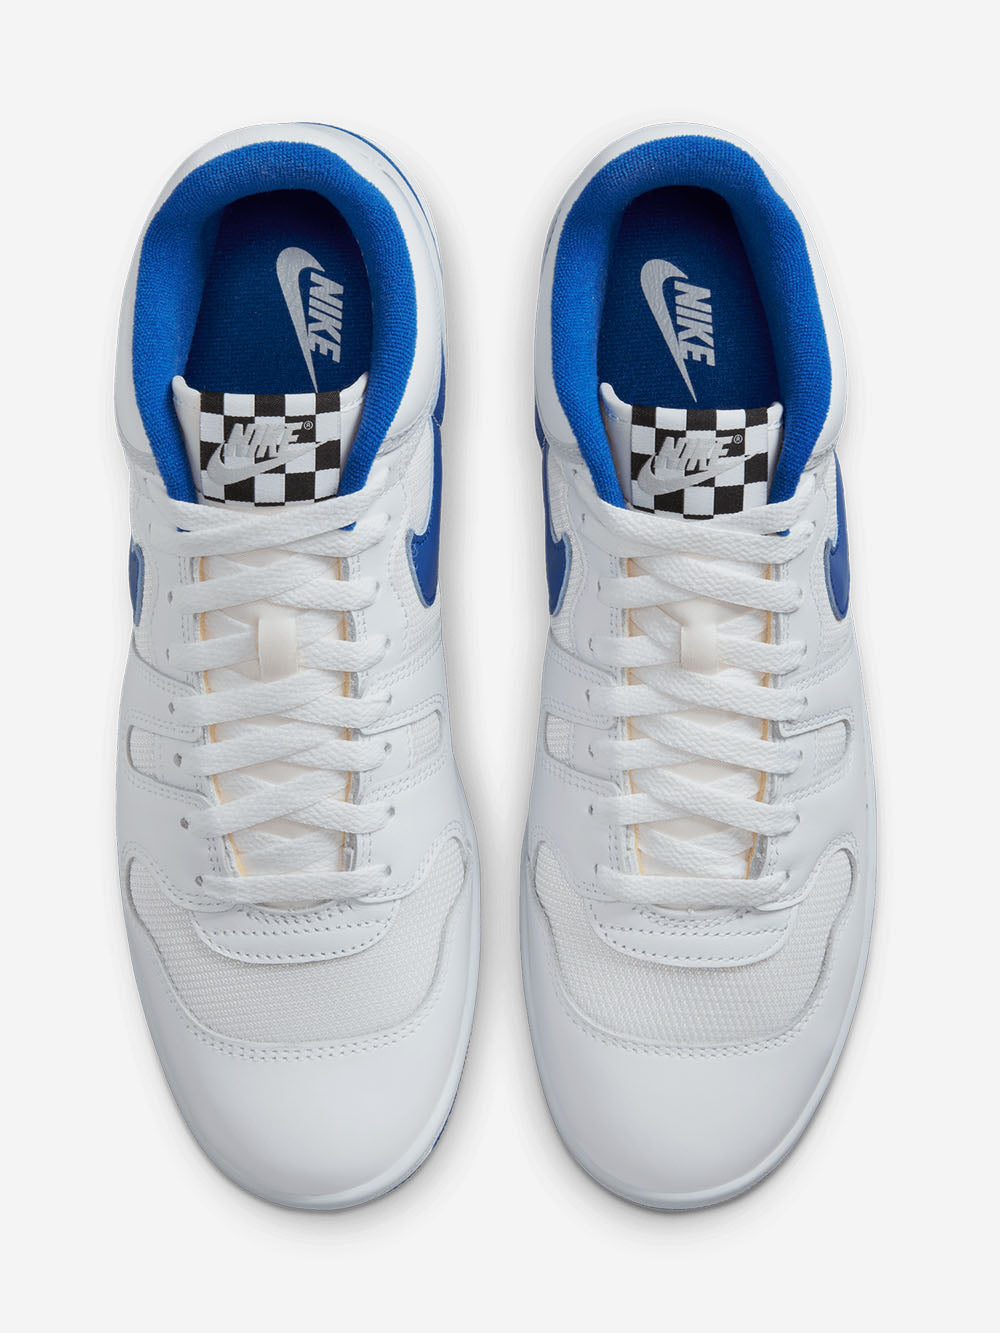 NIKE Mac Attack "Game Royal" Sneakers Blu Urbanstaroma